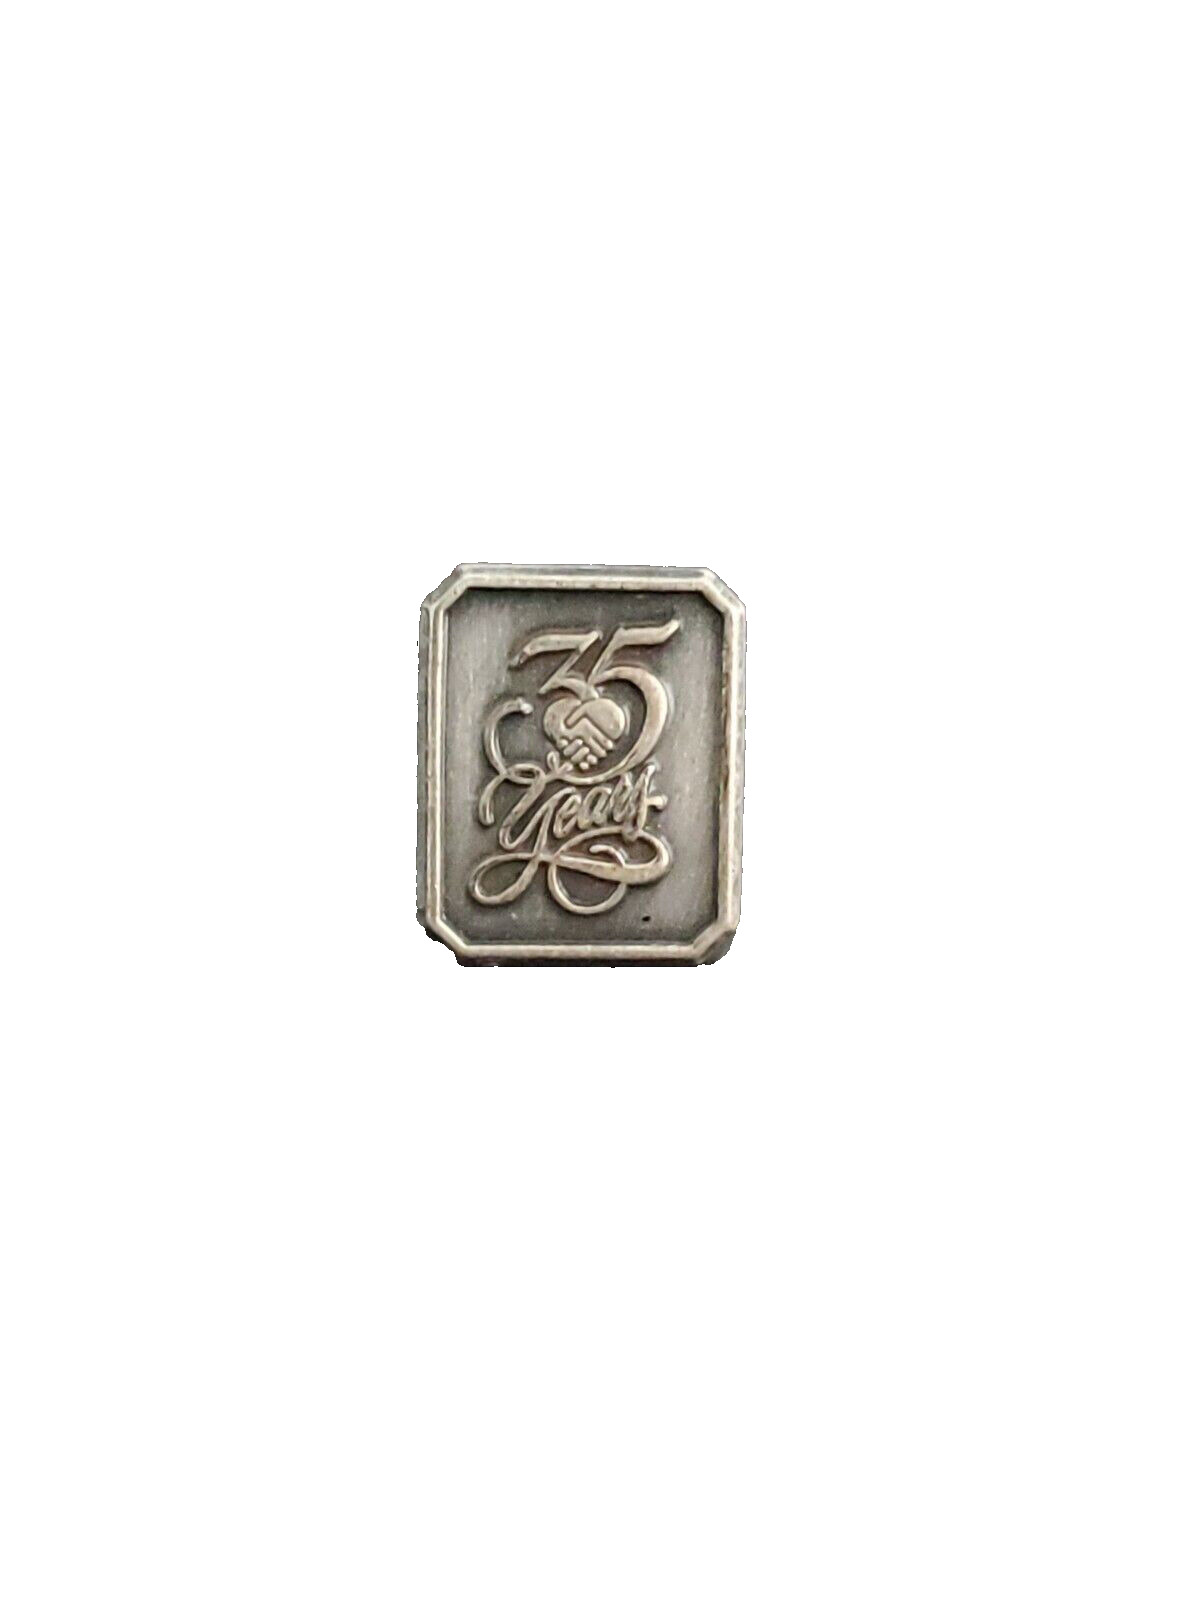 Vintage silver tone United Way company logo 35 Years Pin gb